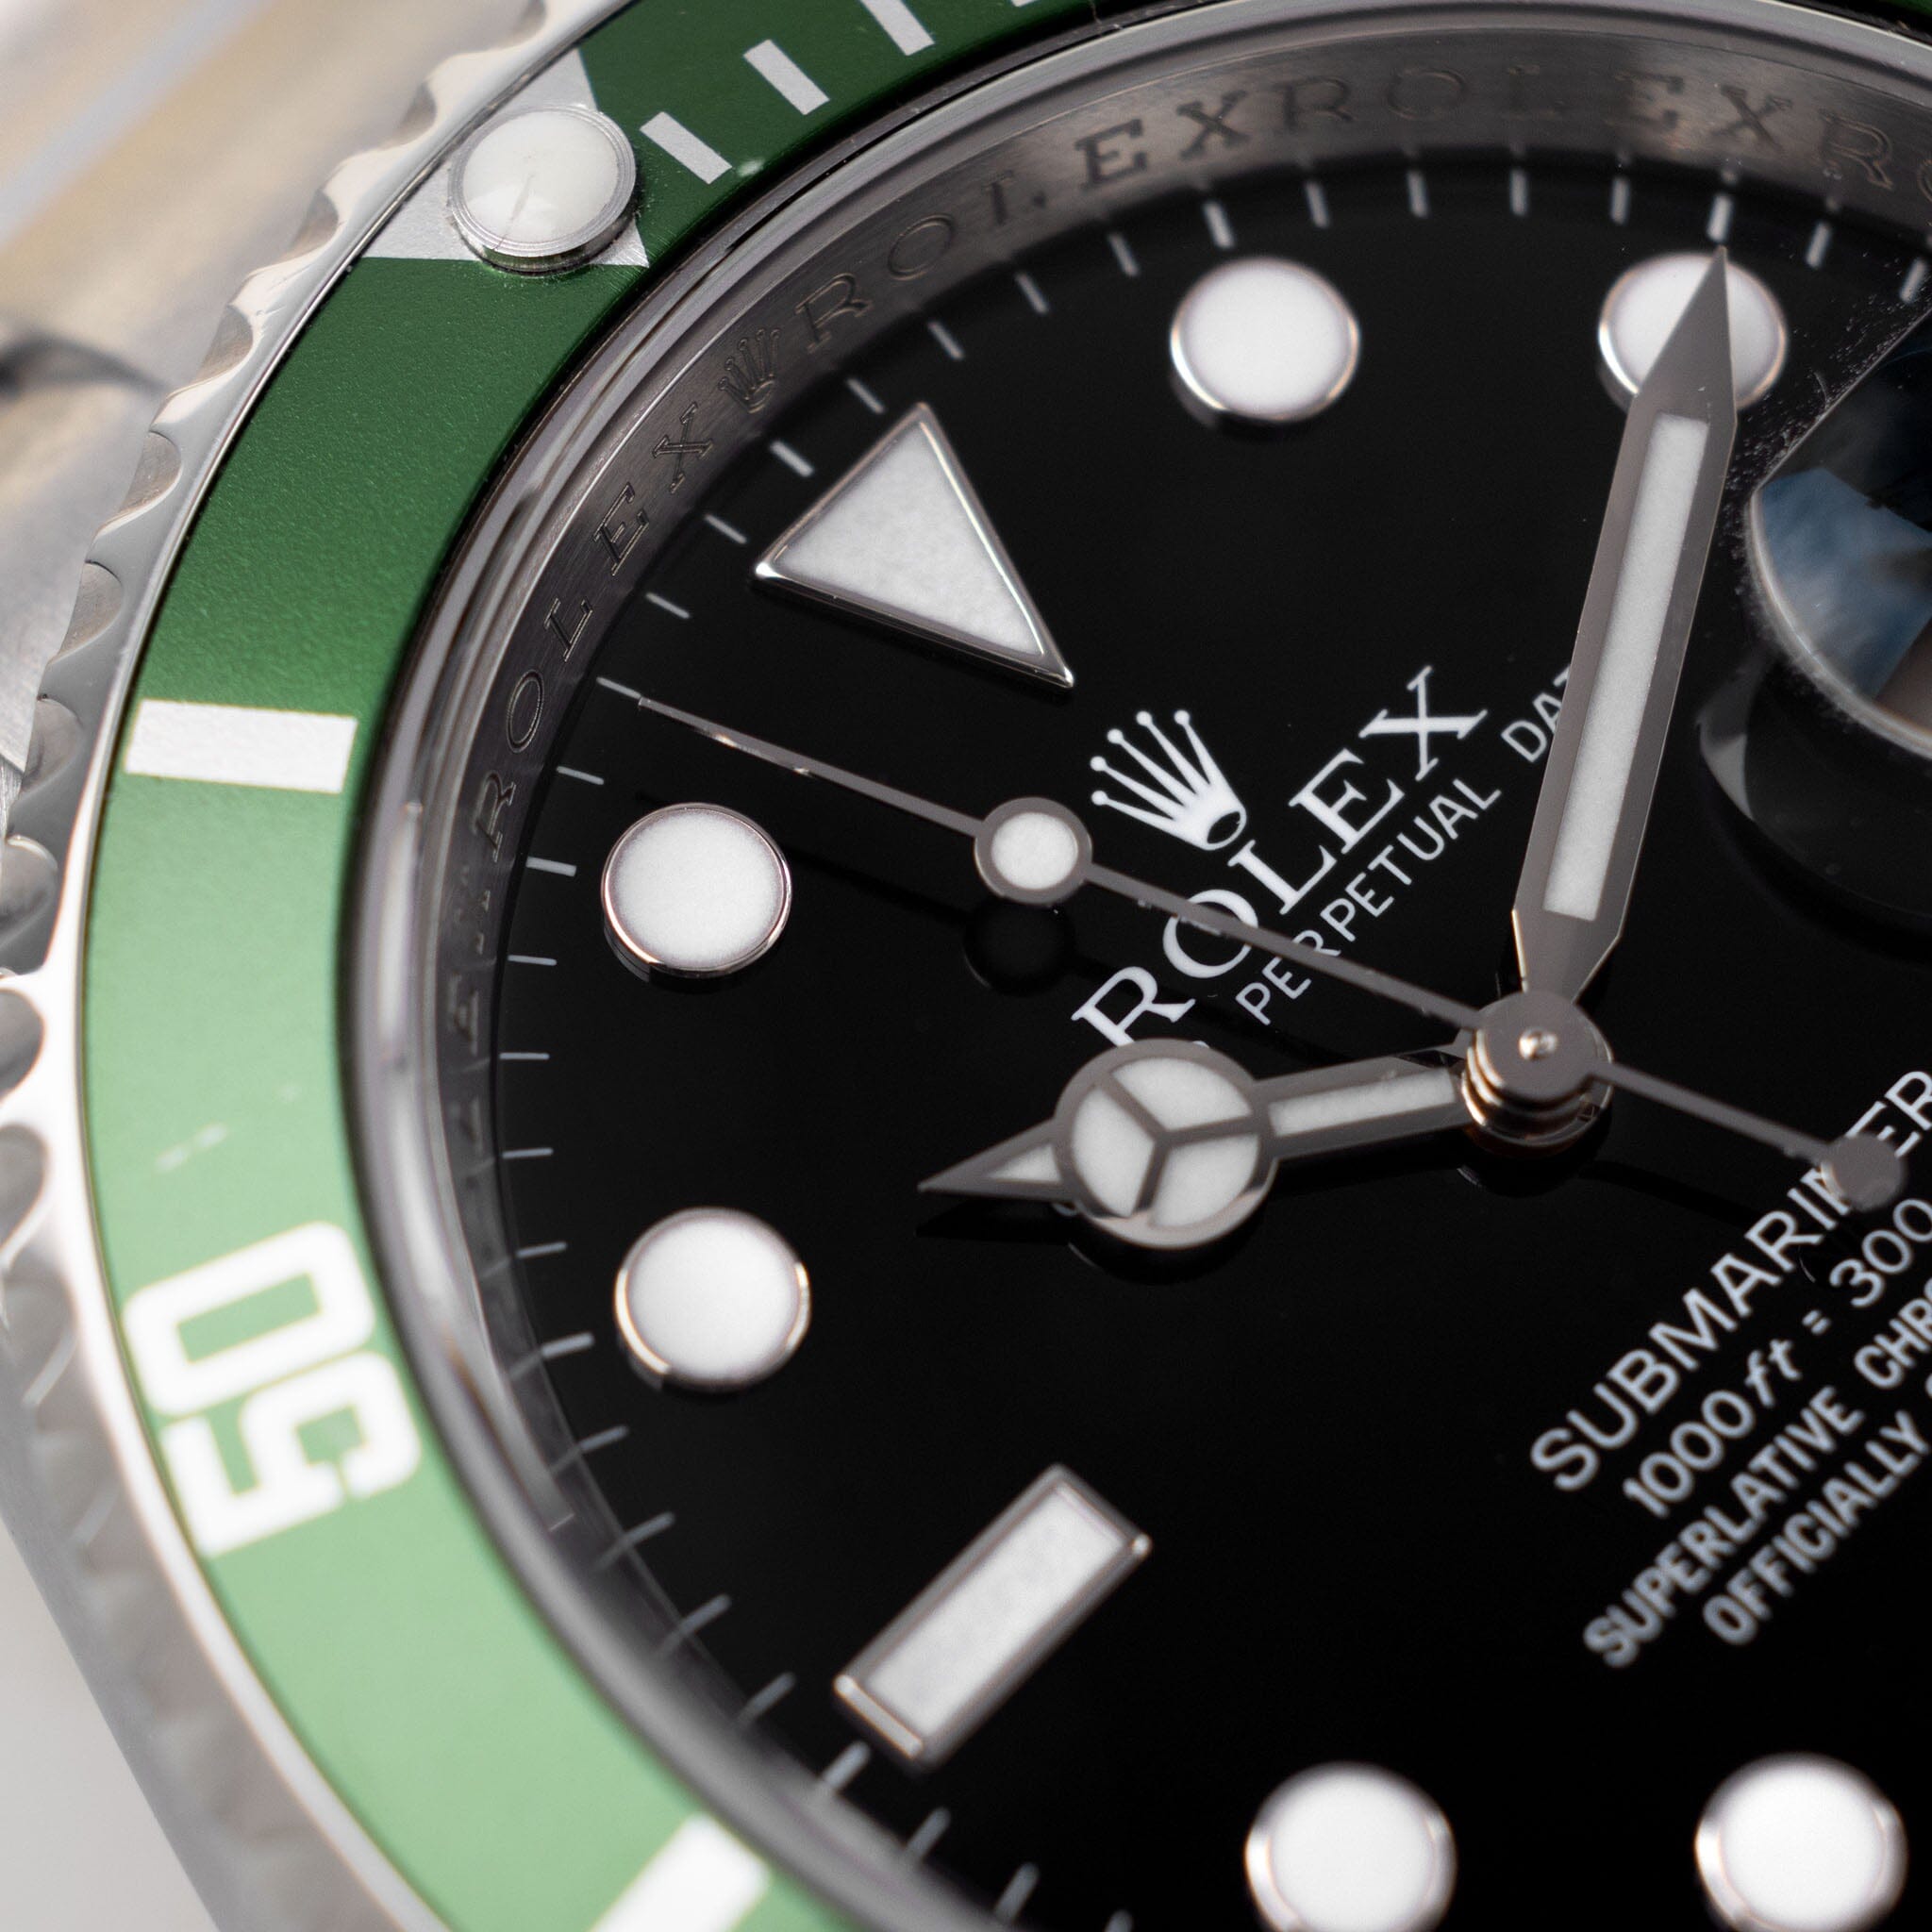 Rolex Submariner Date, Black Dial, Green Bezel Kermit Flat Four, Steel,  16610LV